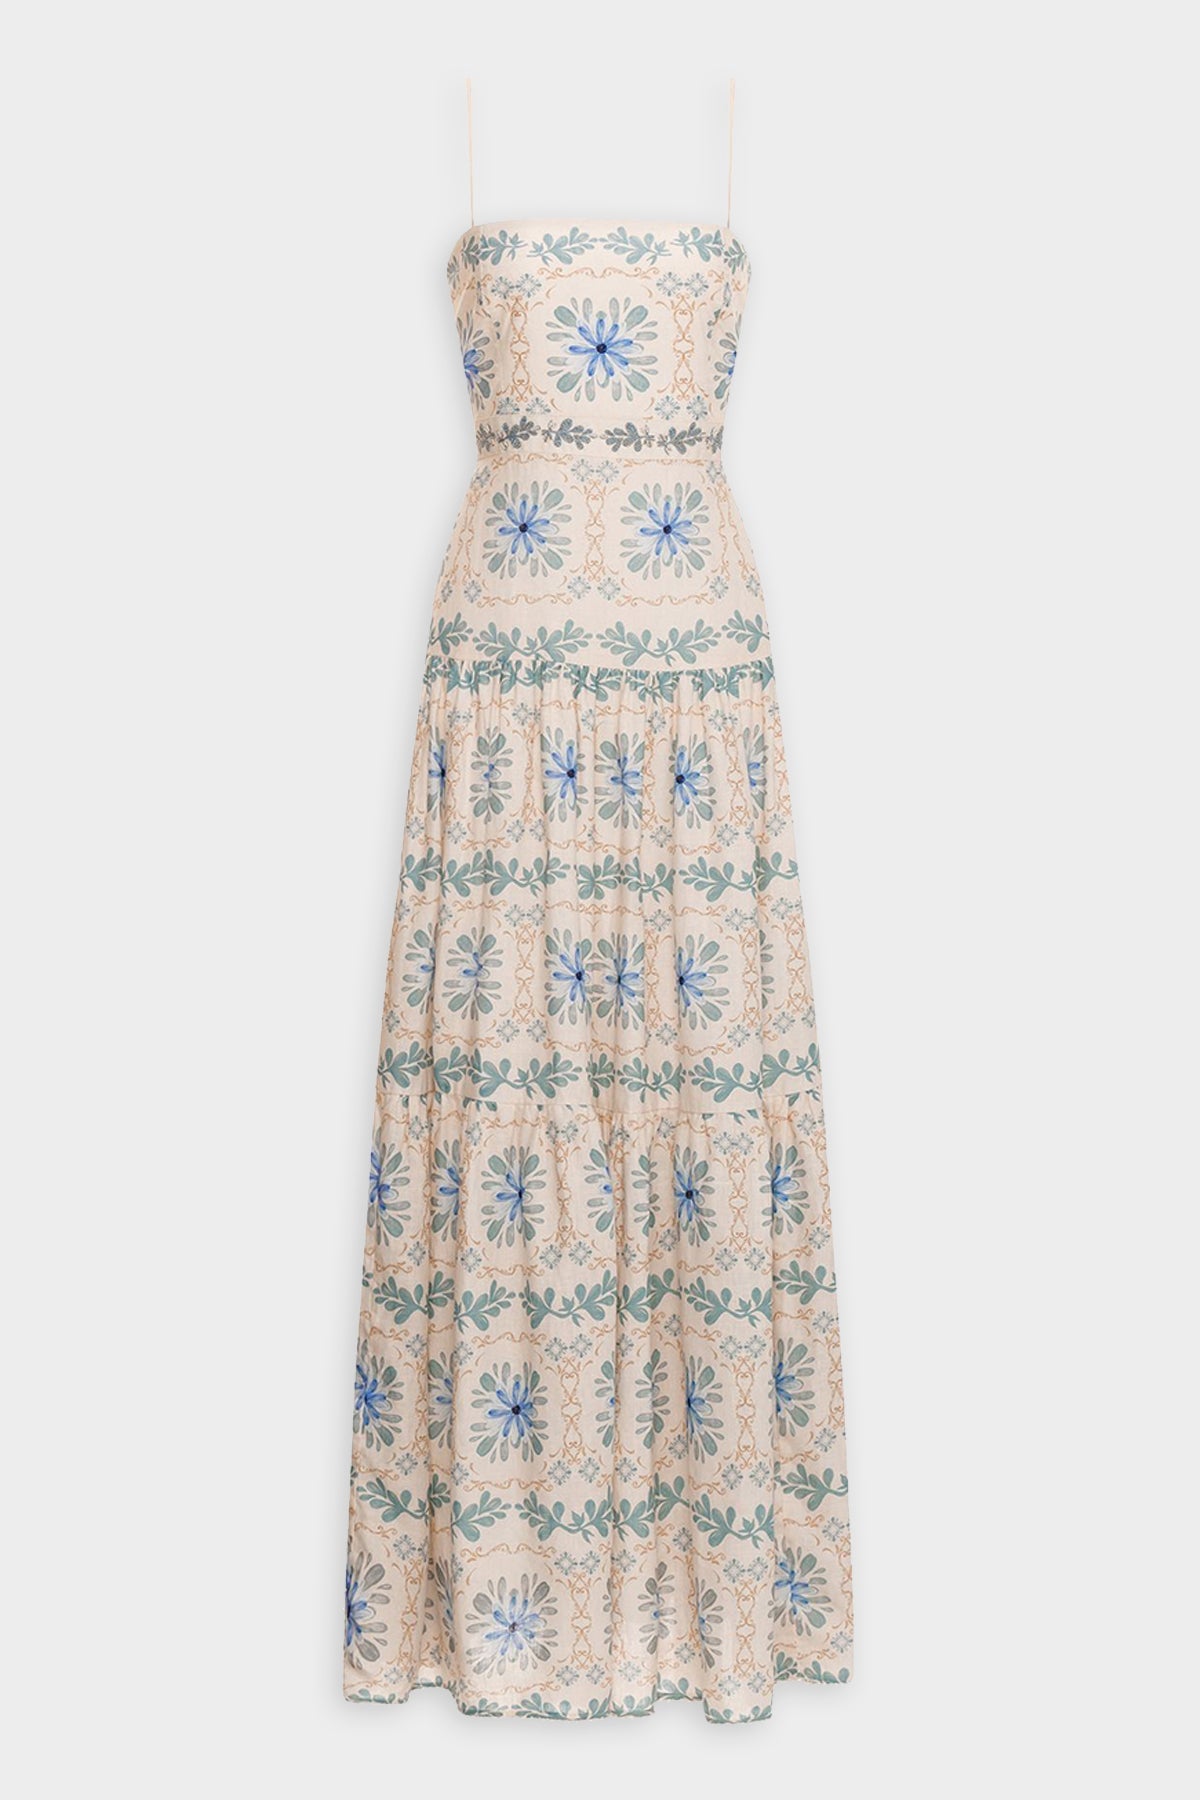 Lima Chivas Hand-Embroidered Linen Maxi Dress in Blue - shop-olivia.com